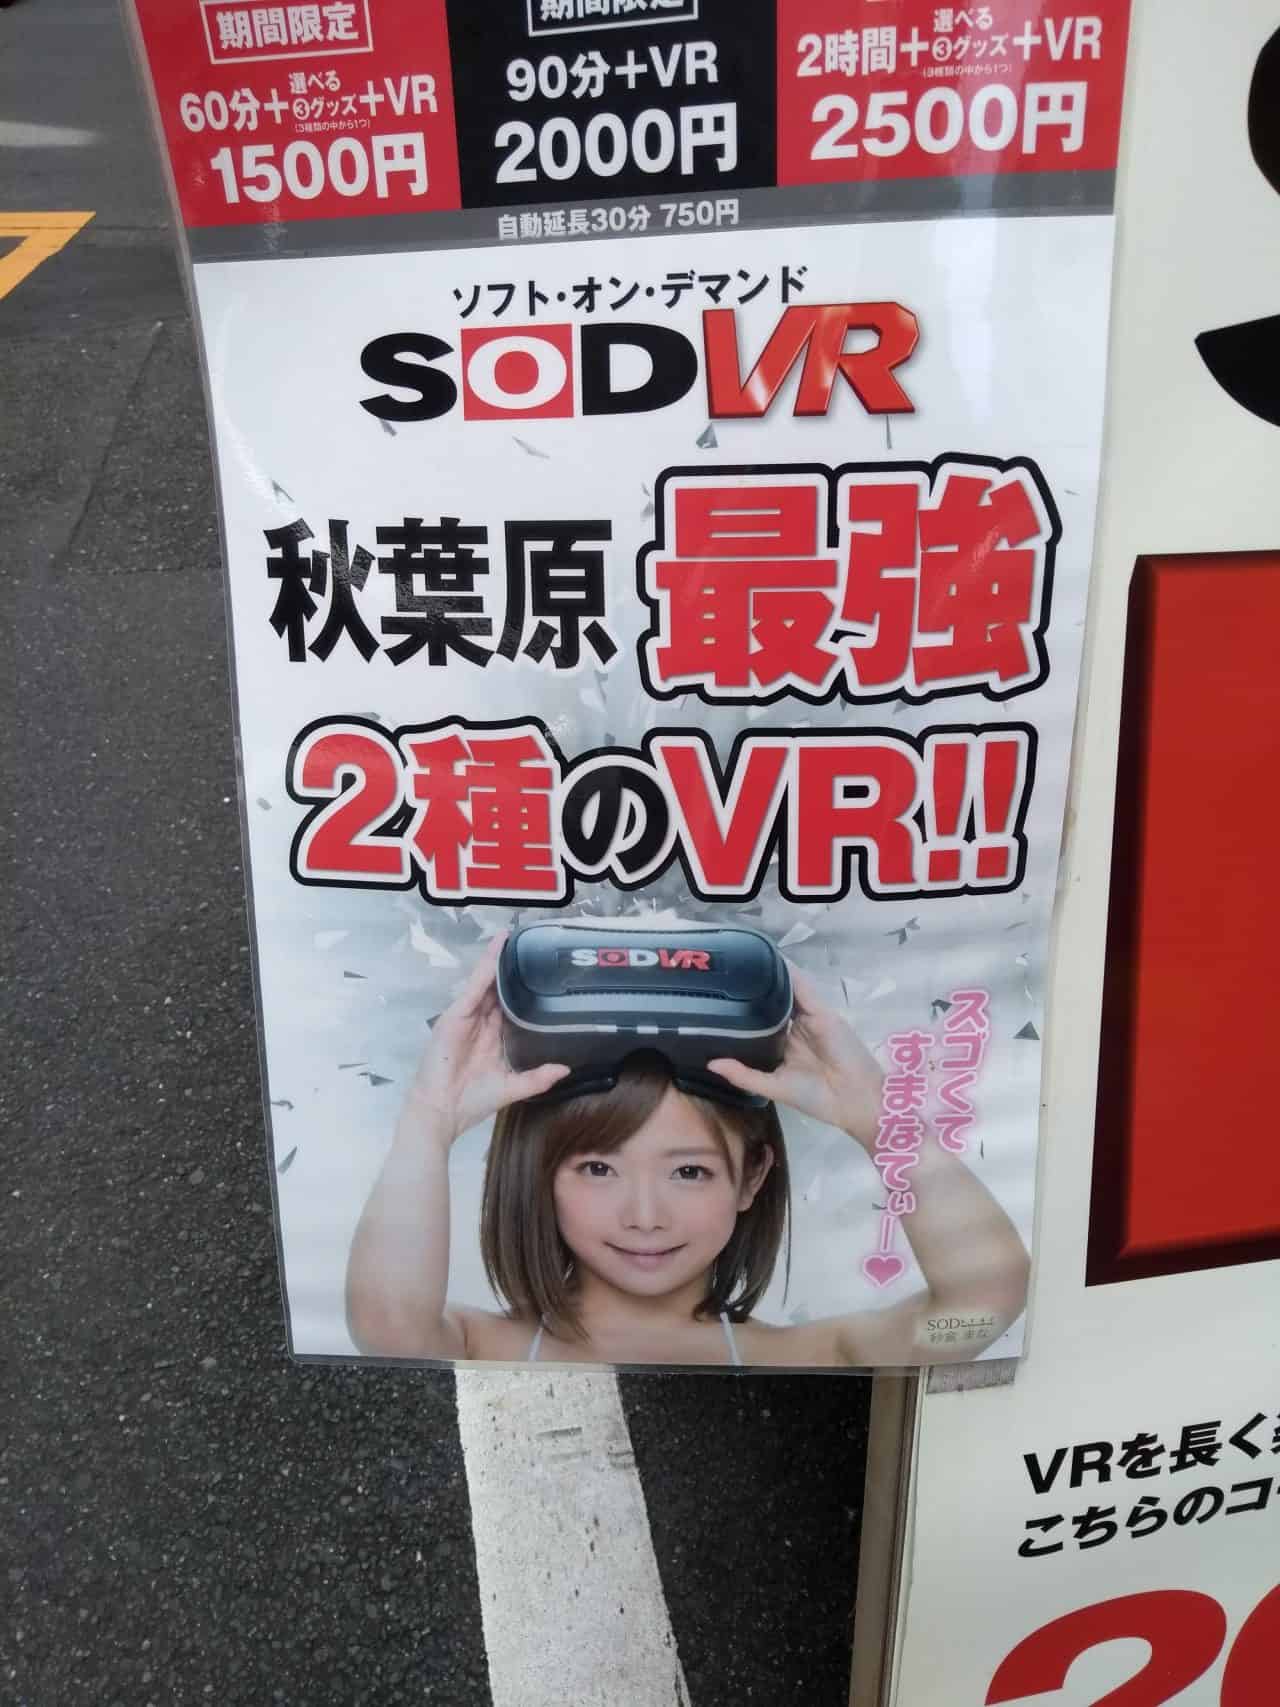 SOD VR